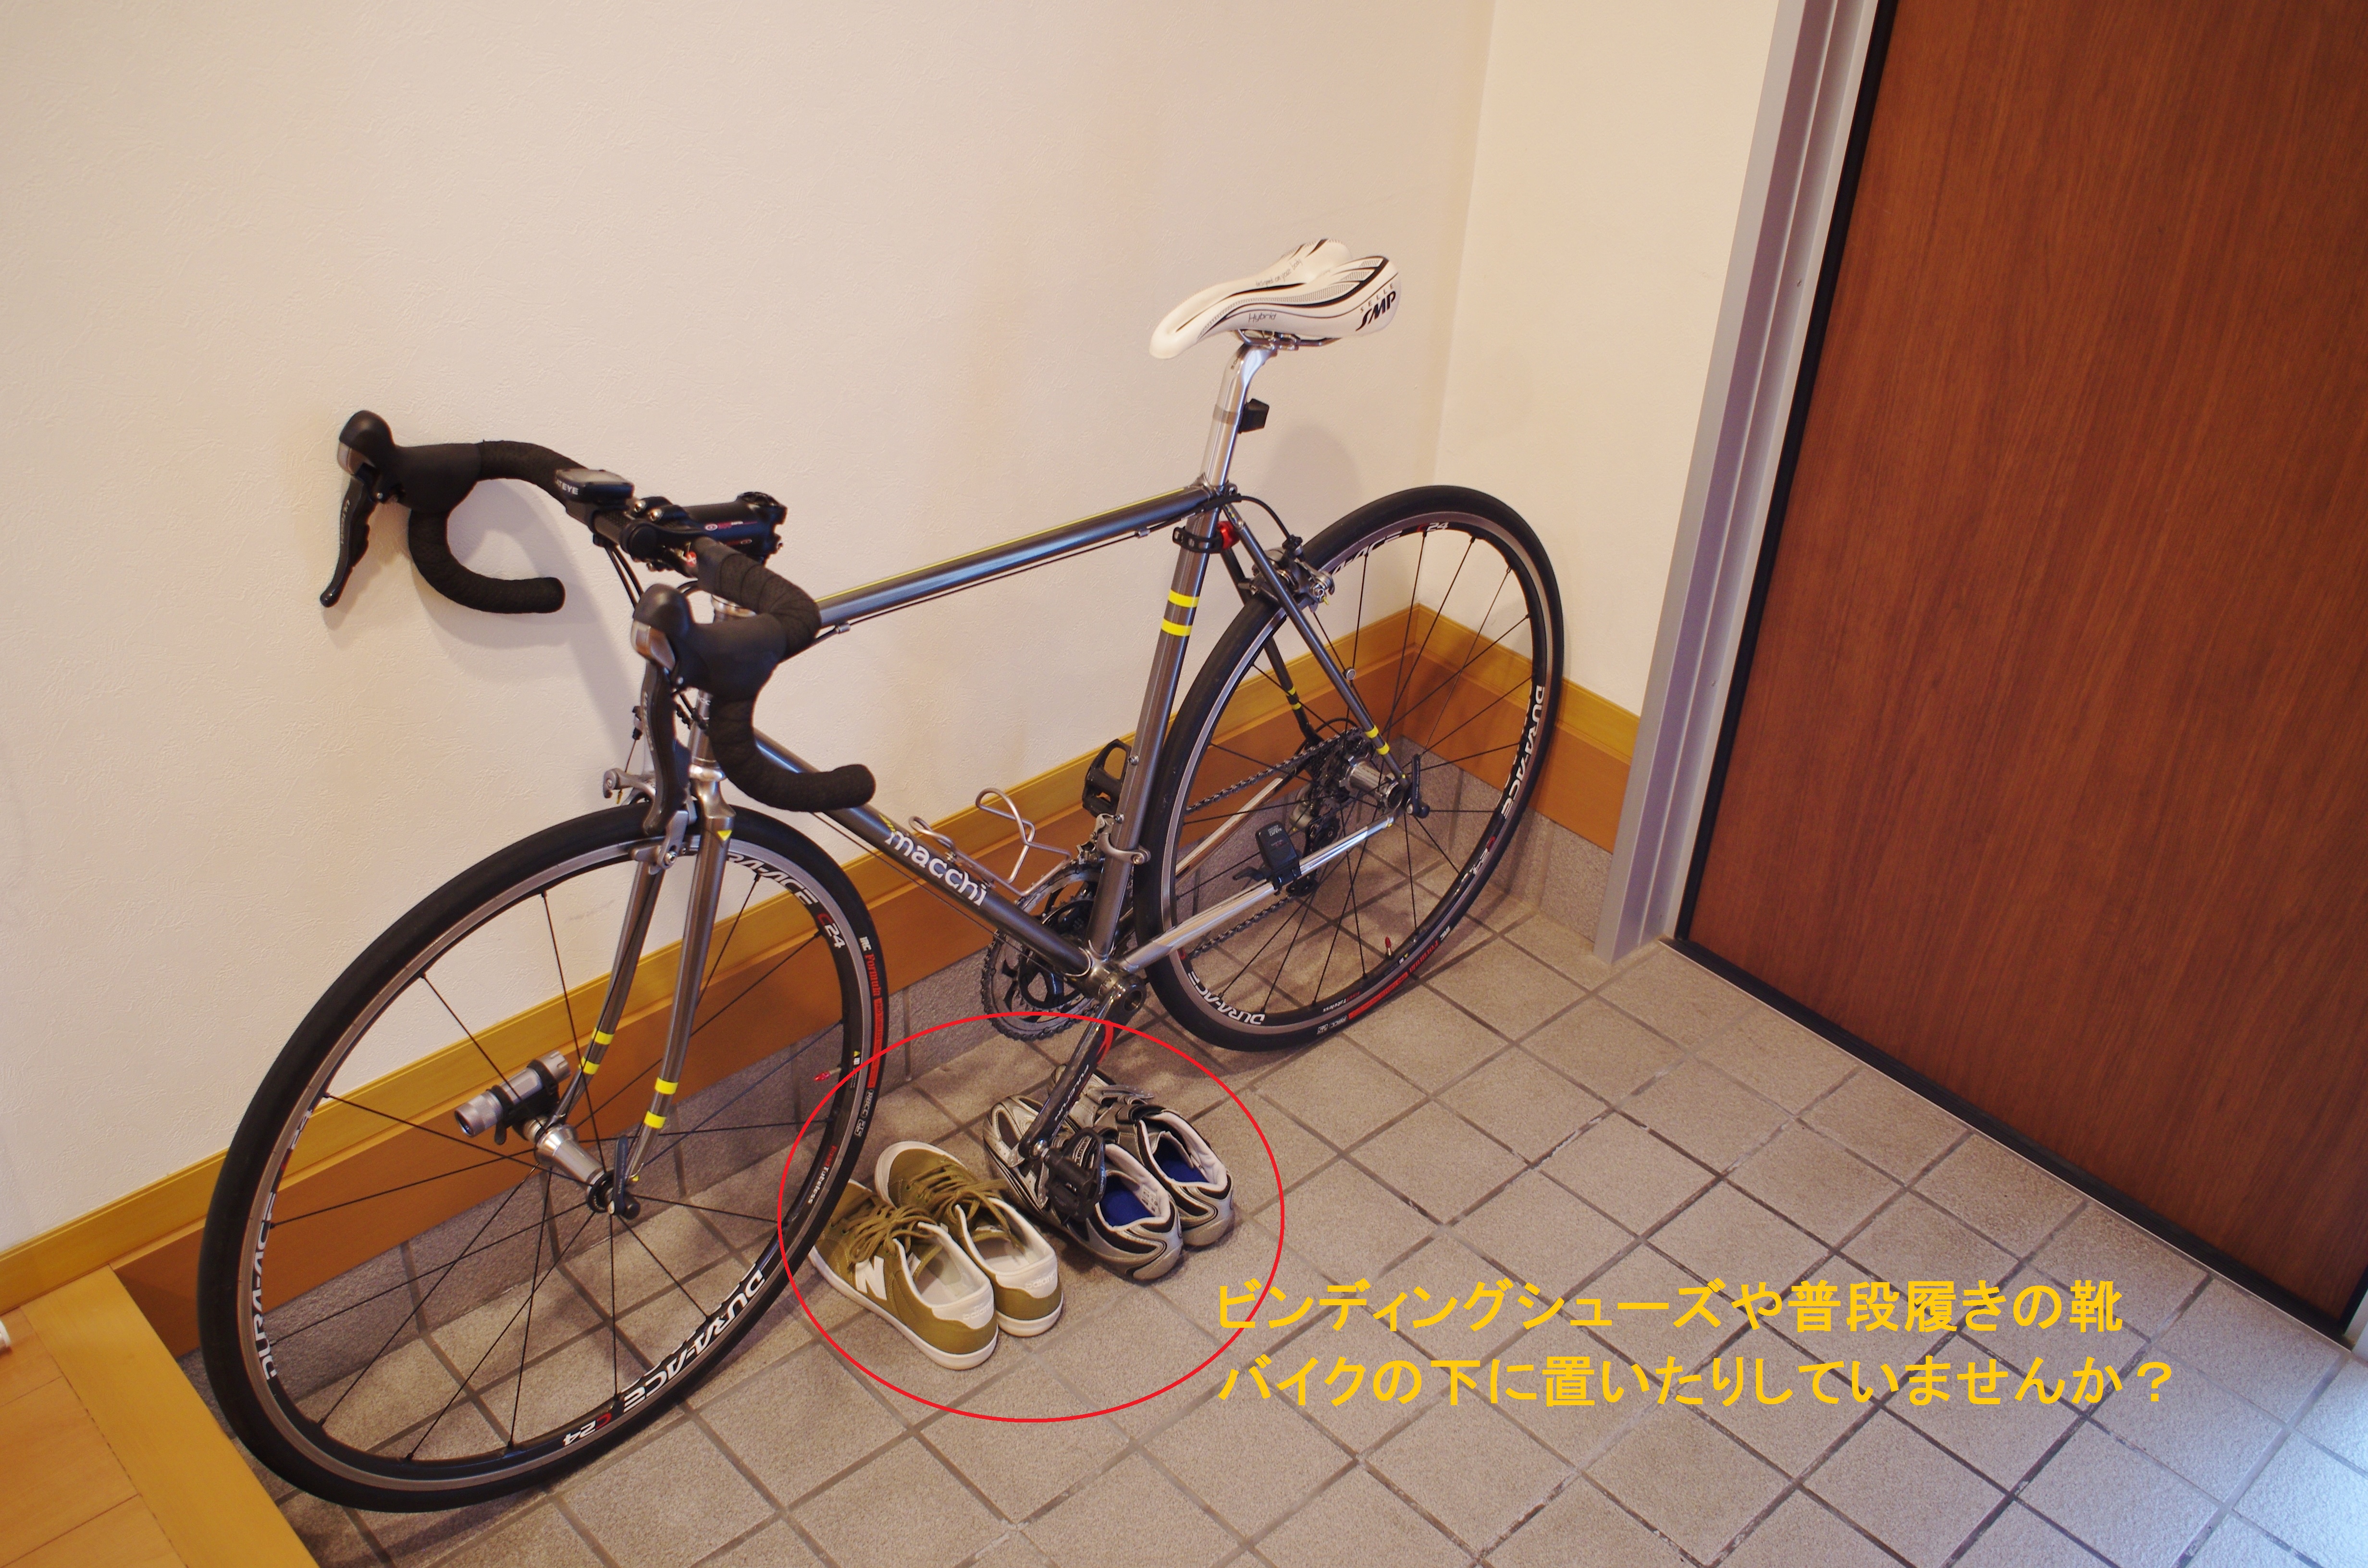 航海の 消去 面積 自転車 収納 玄関 lucebeauty.jp